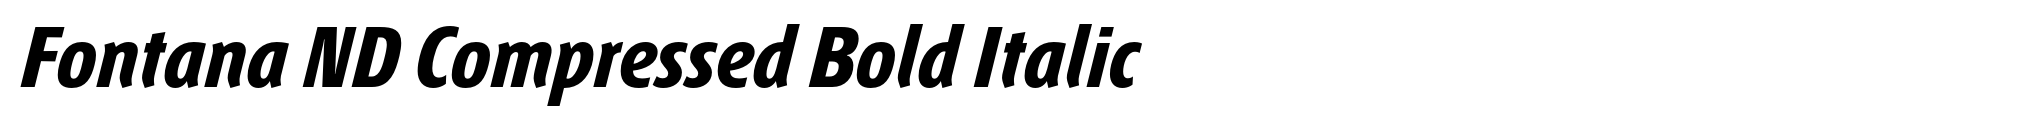 Fontana ND Compressed Bold Italic image